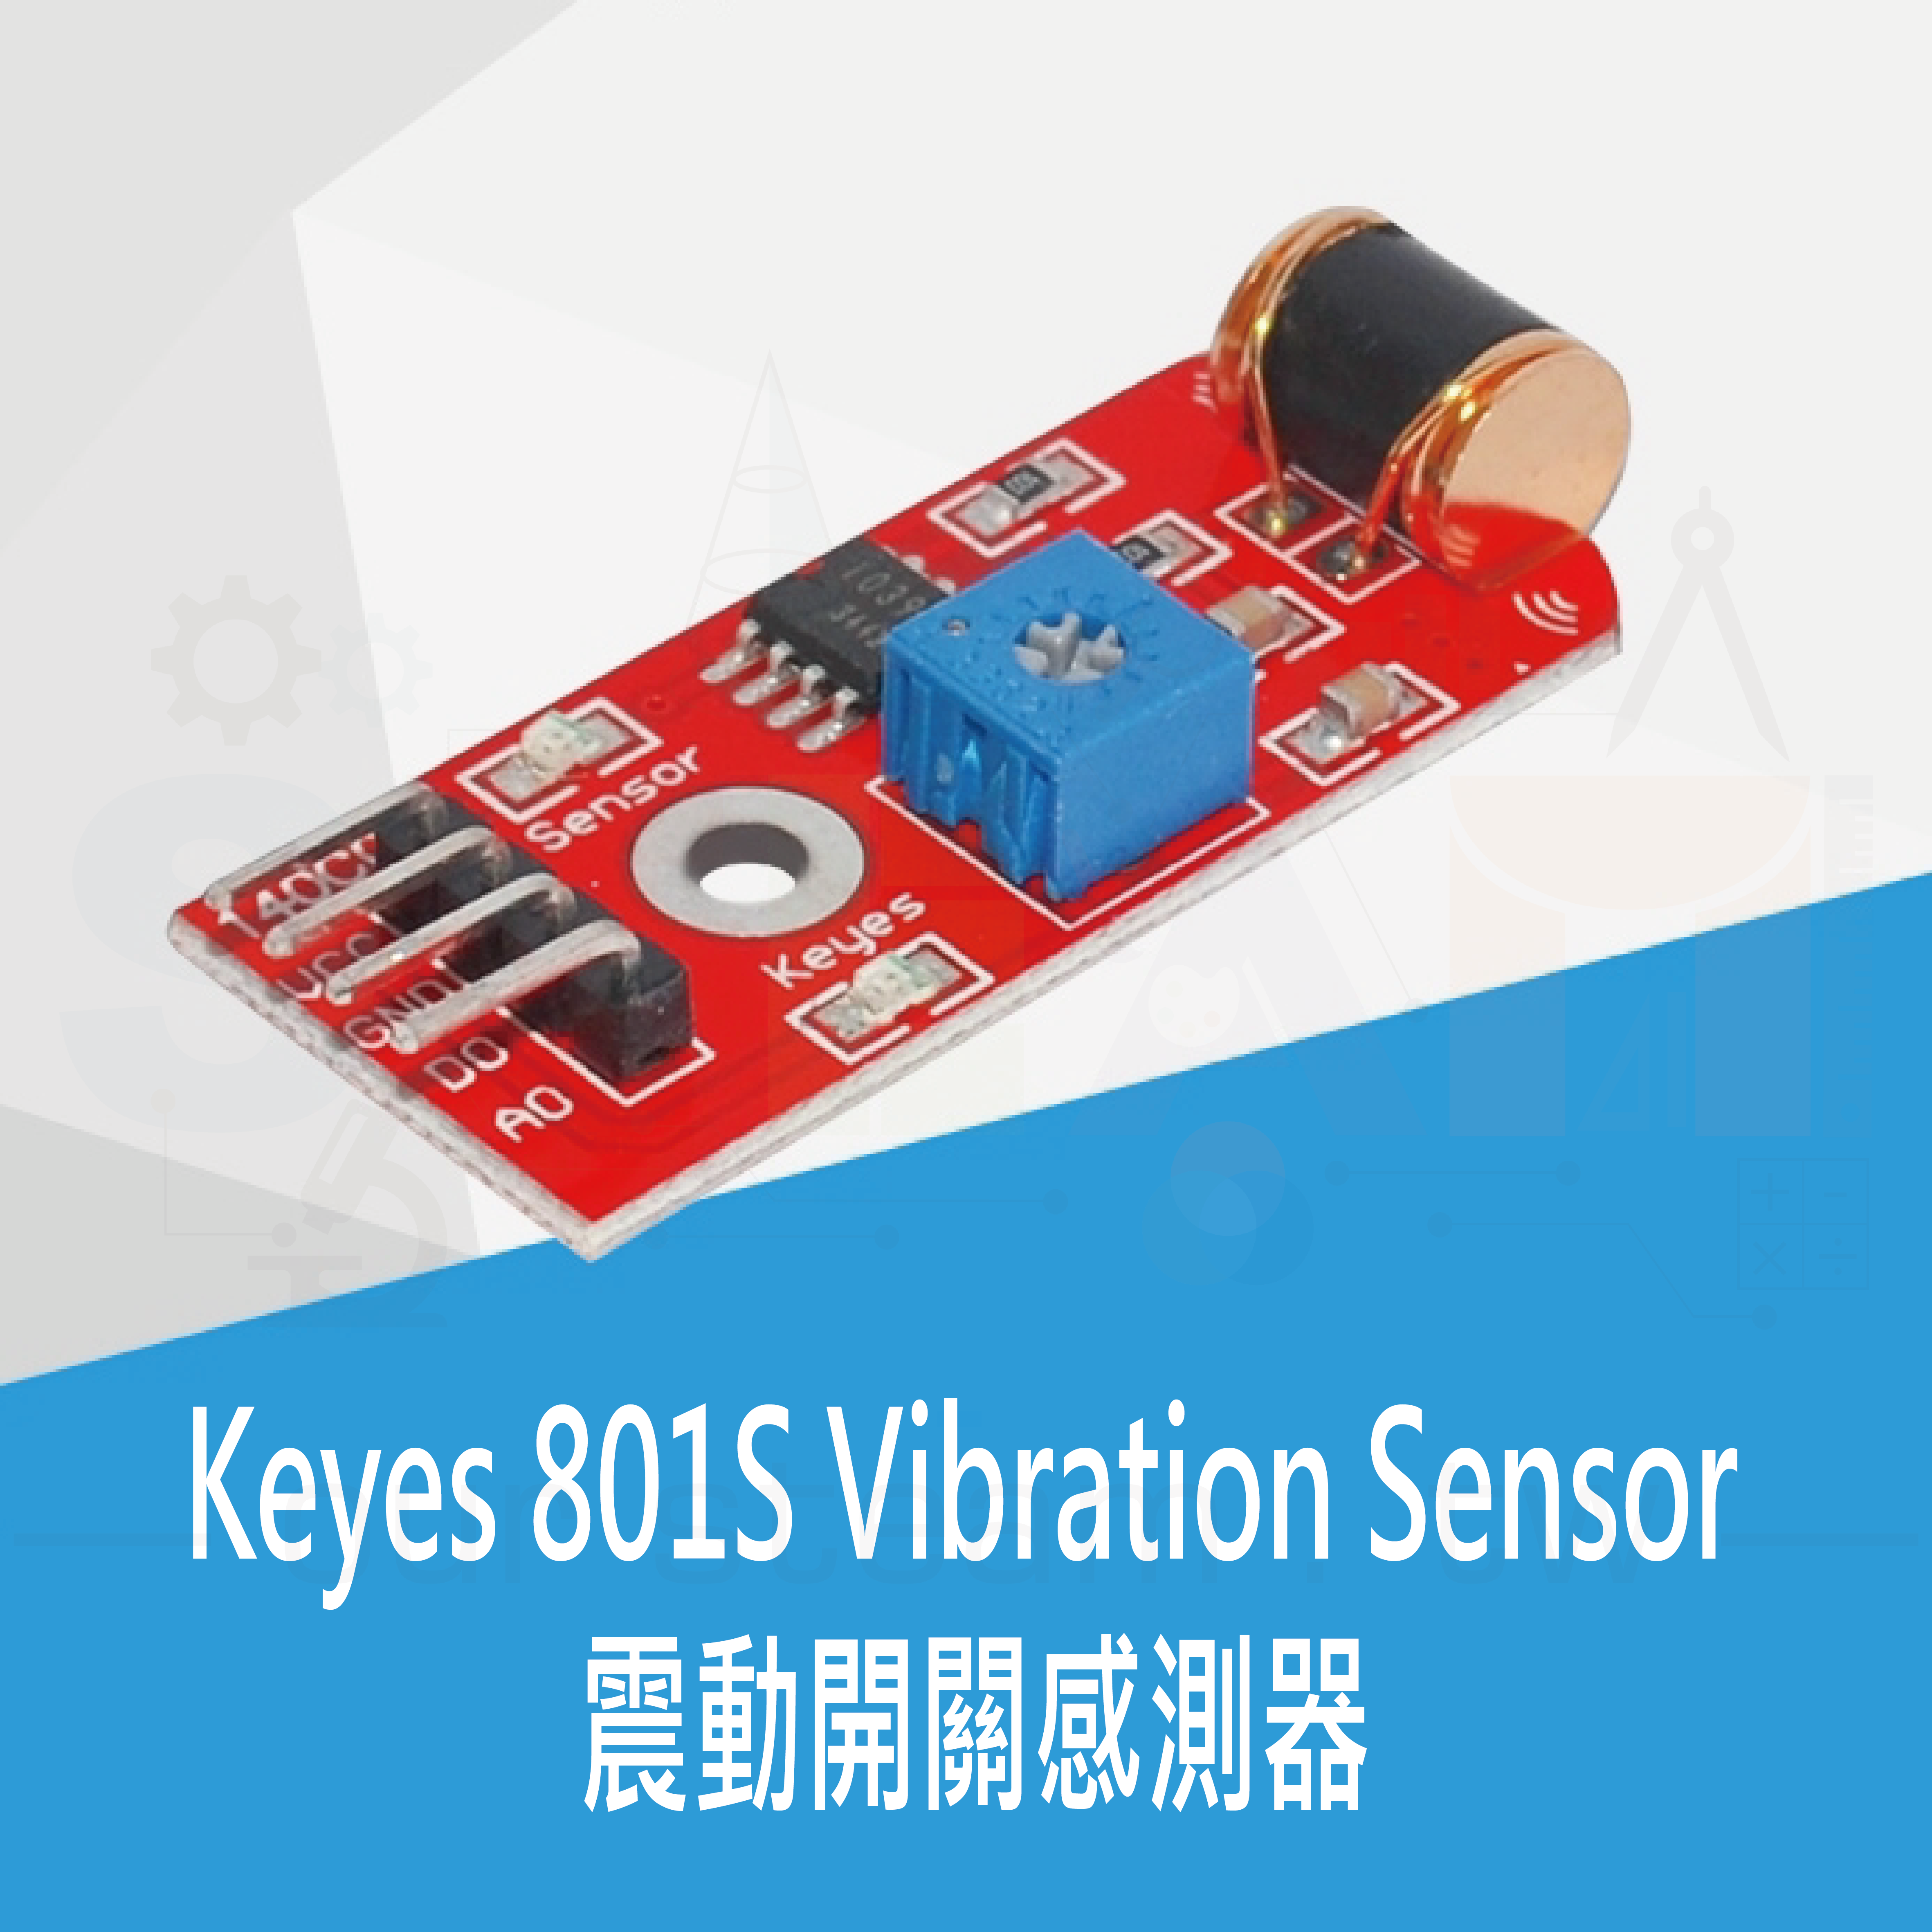 【KYS016】Keyes 801S Vibration Sensor 震動開關感測器